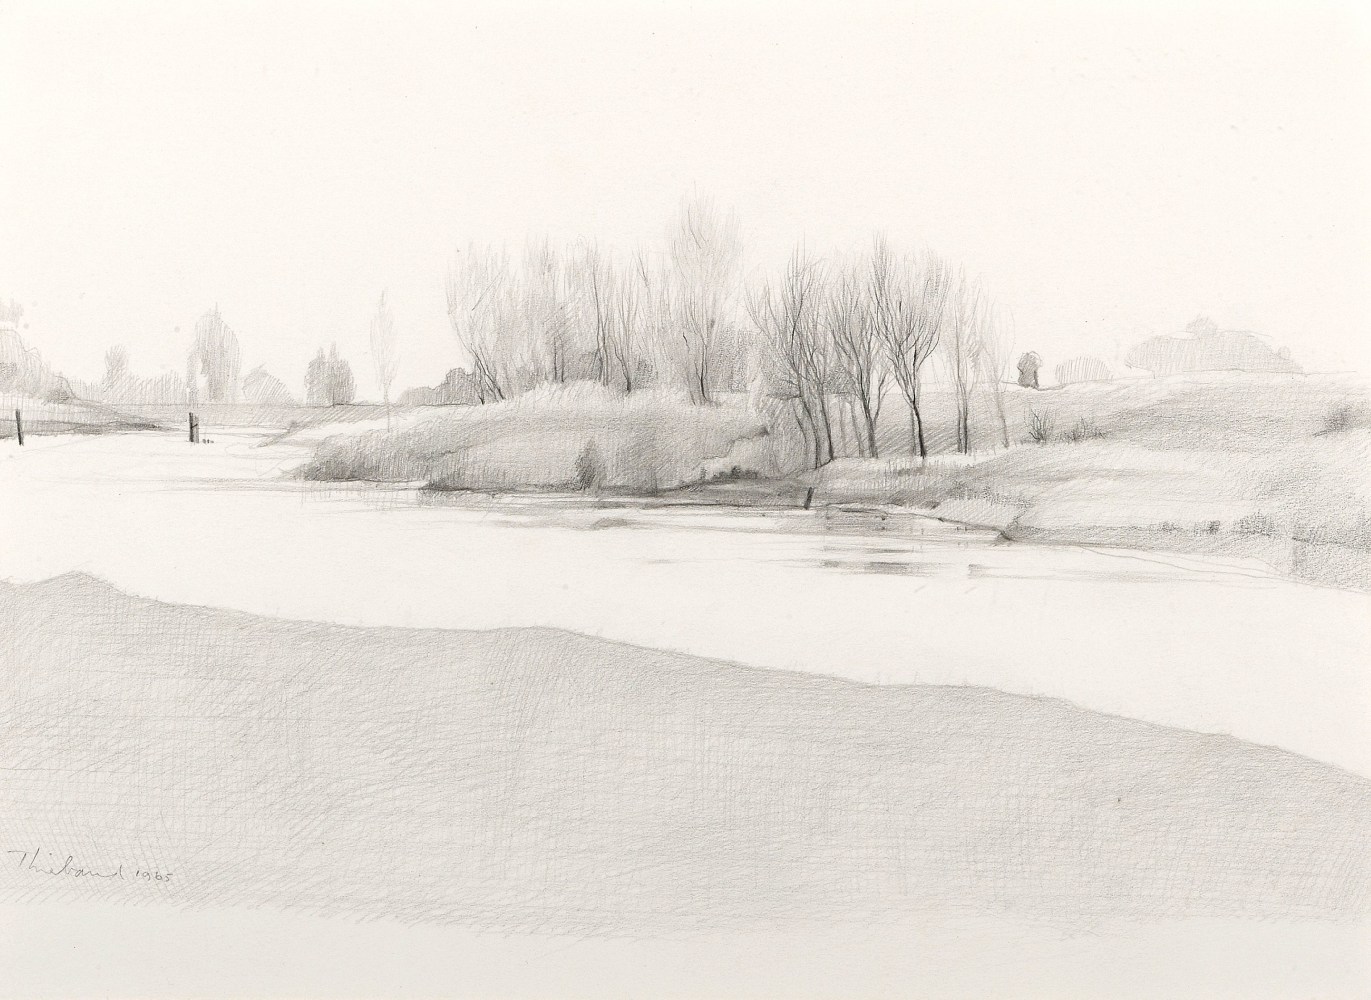 Wayne Thiebaud, Landscape, 1965, pencil on paper, 9 1/2 x 12 3/4 in.